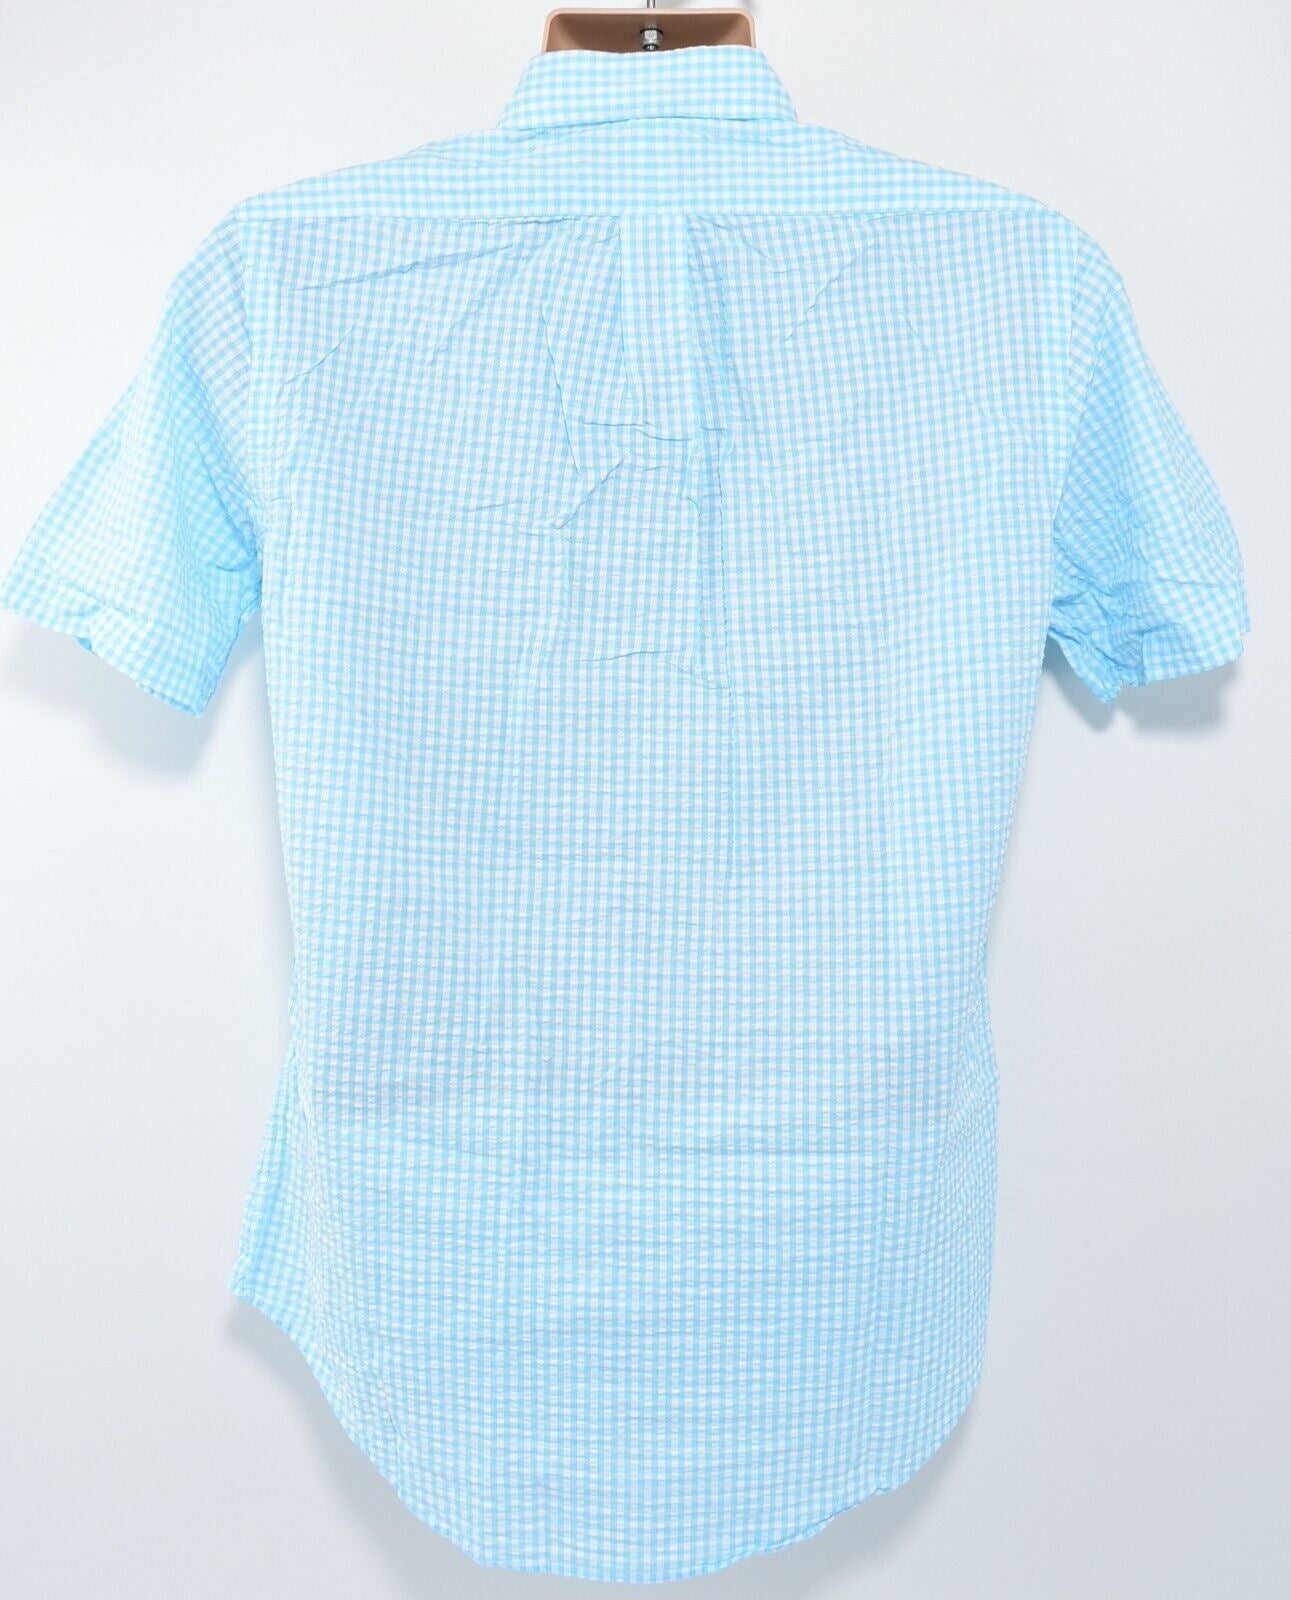 POLO RALPH LAUREN Mens Seersucker Short Sleeve Shirt, Turquoise/Checked, size S